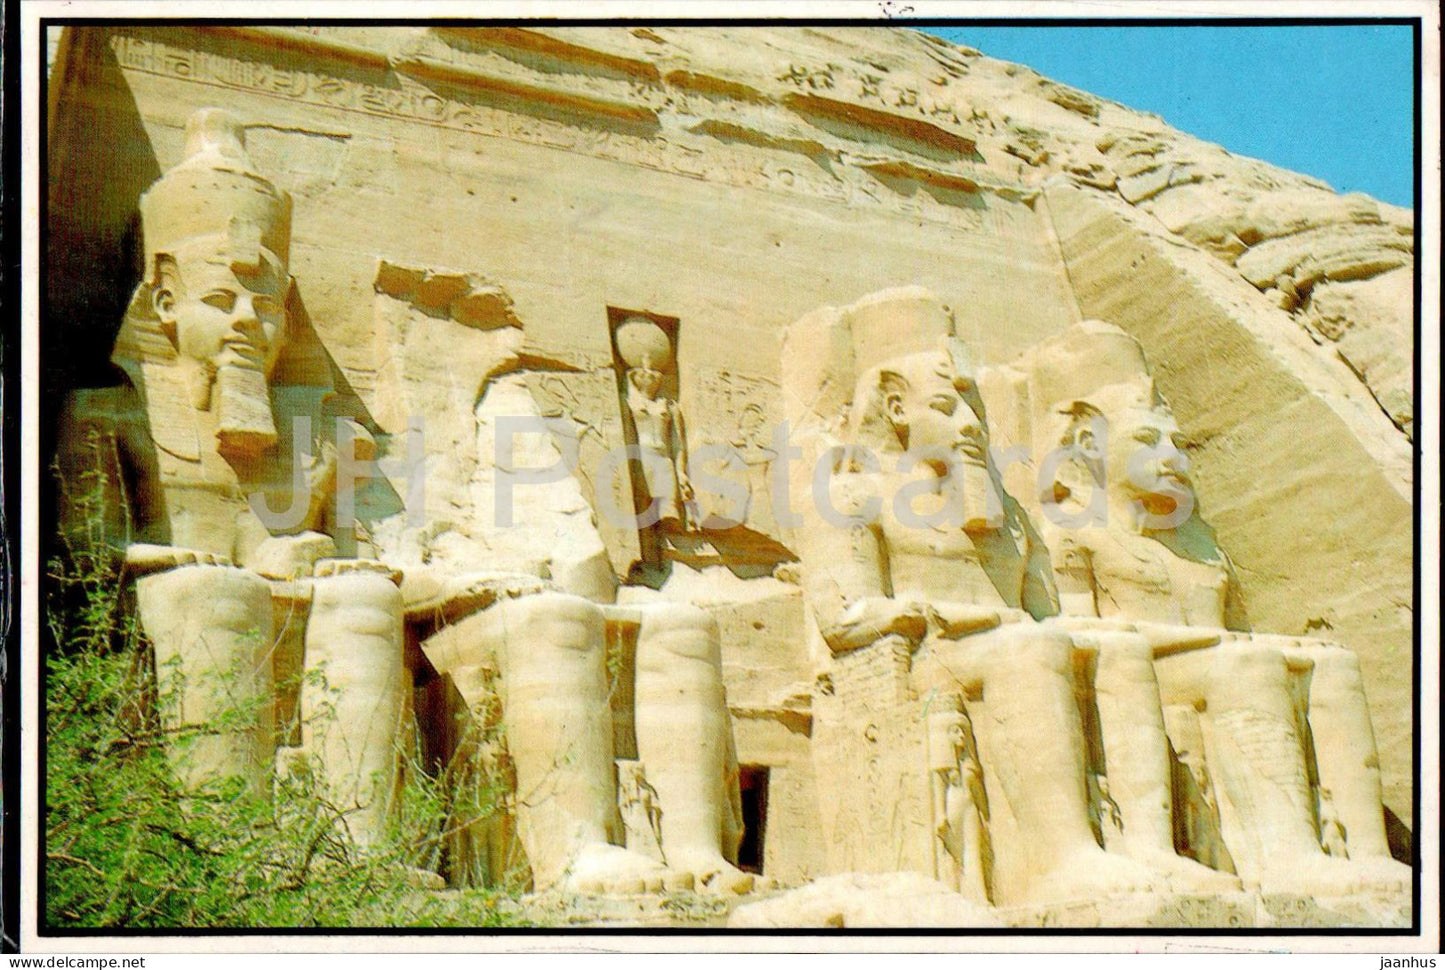 Abu Simbel Four Statues of Ramses II - ancient world - Egypt - unused - JH Postcards